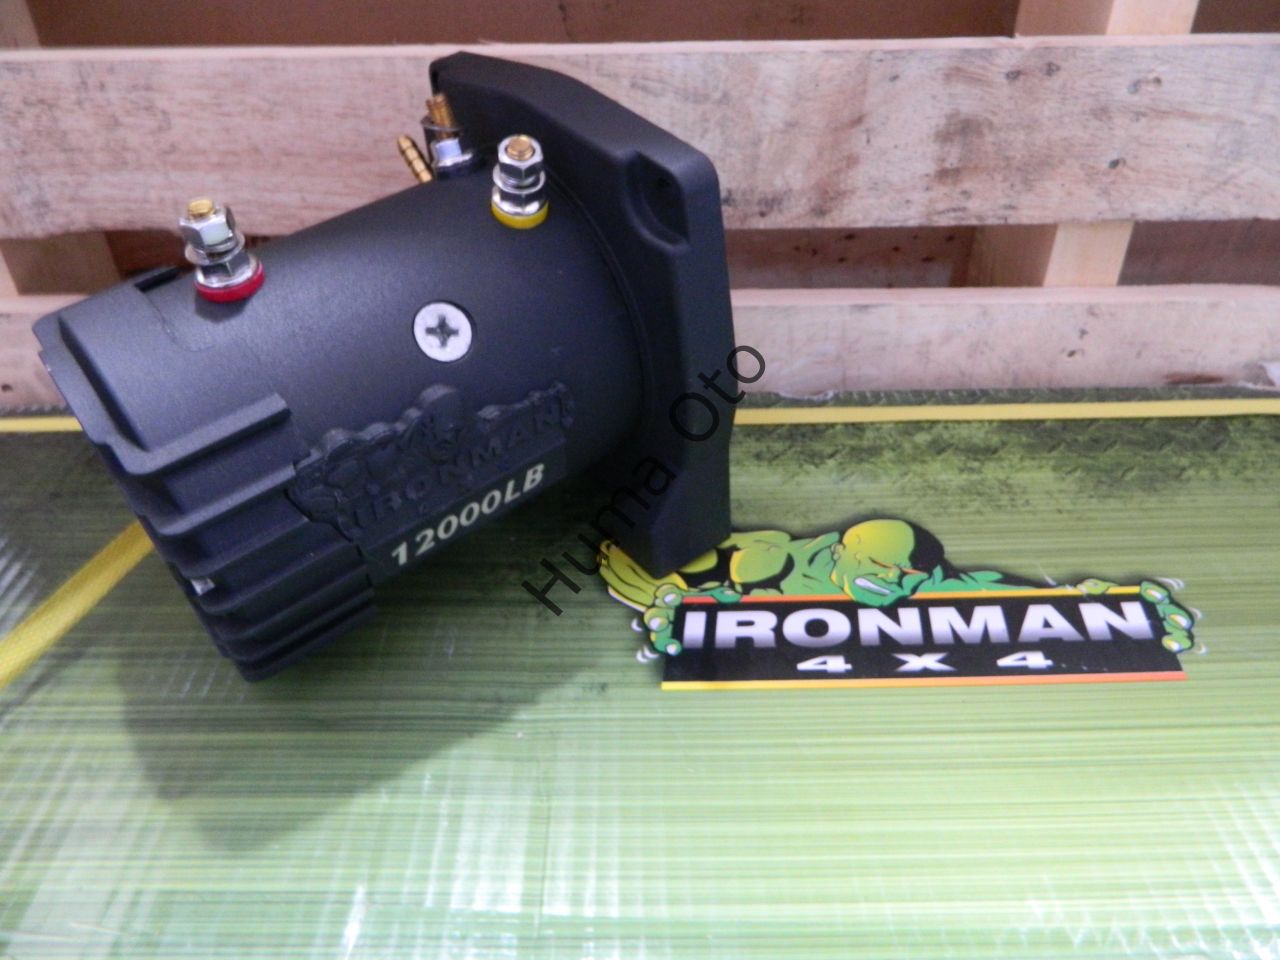 Ironman 4x4 12000LB Vinç Motoru